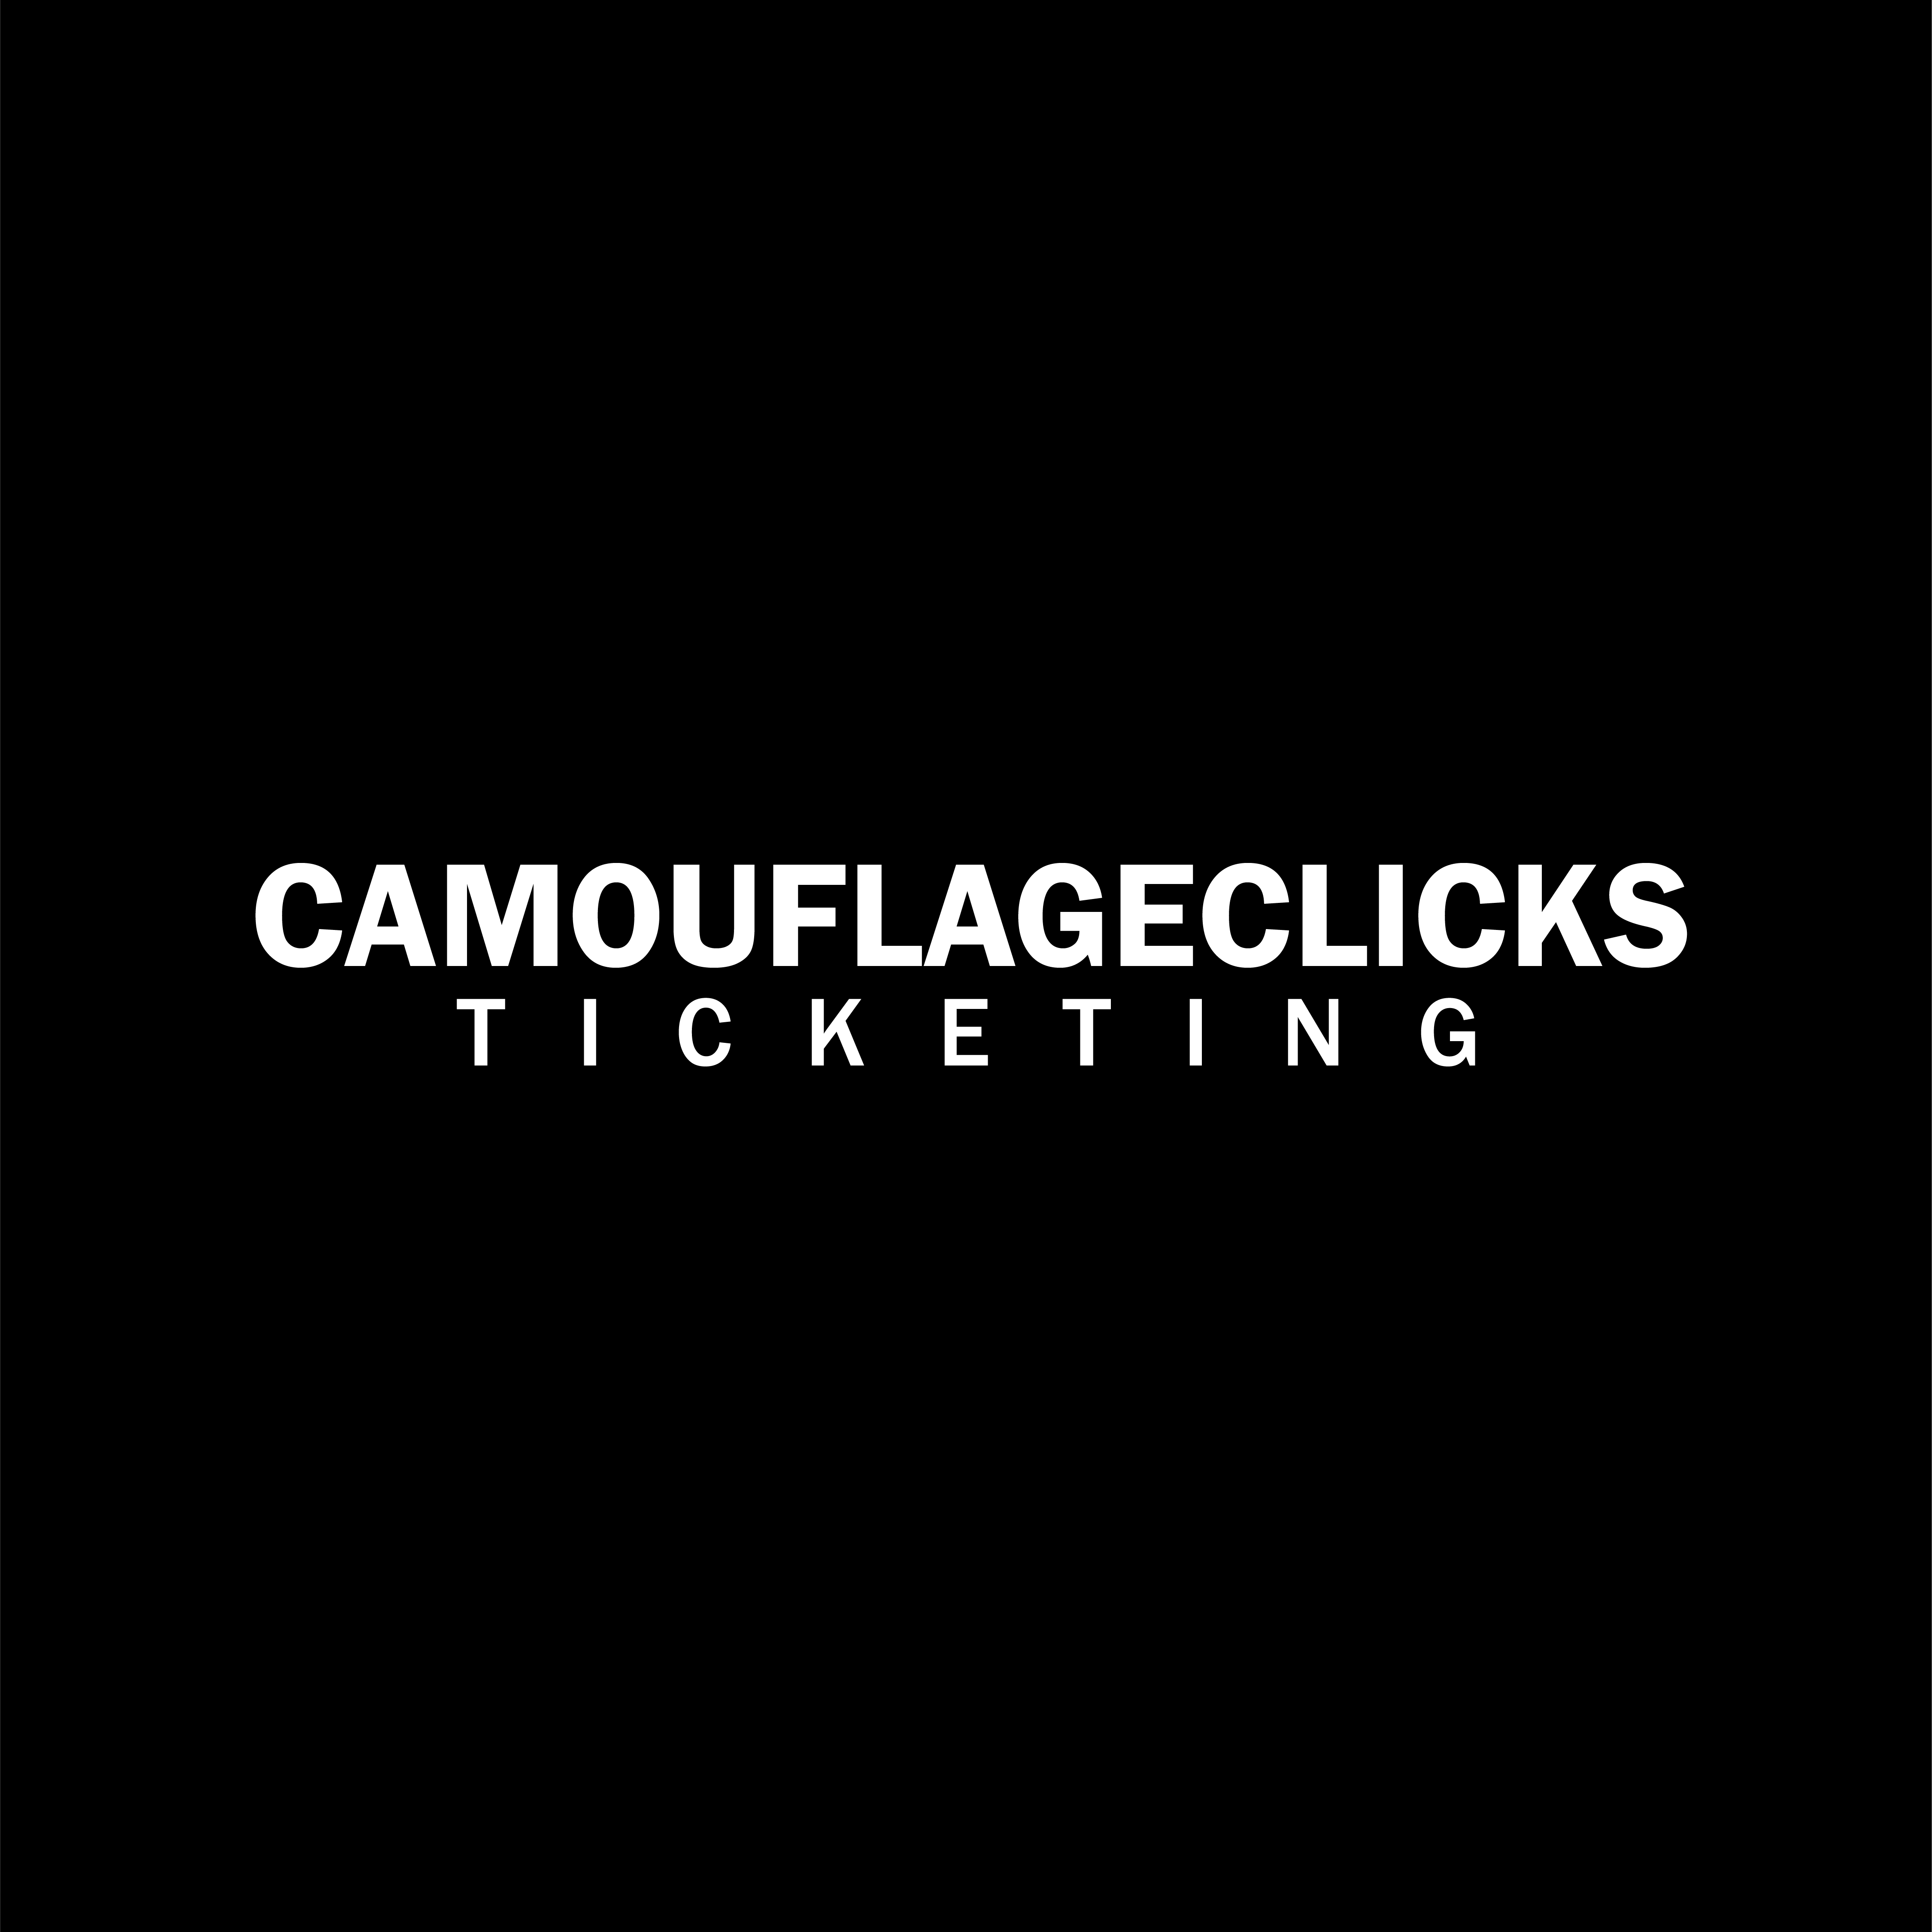 Camouflageclicks Ticketing|Banquet Halls|Event Services